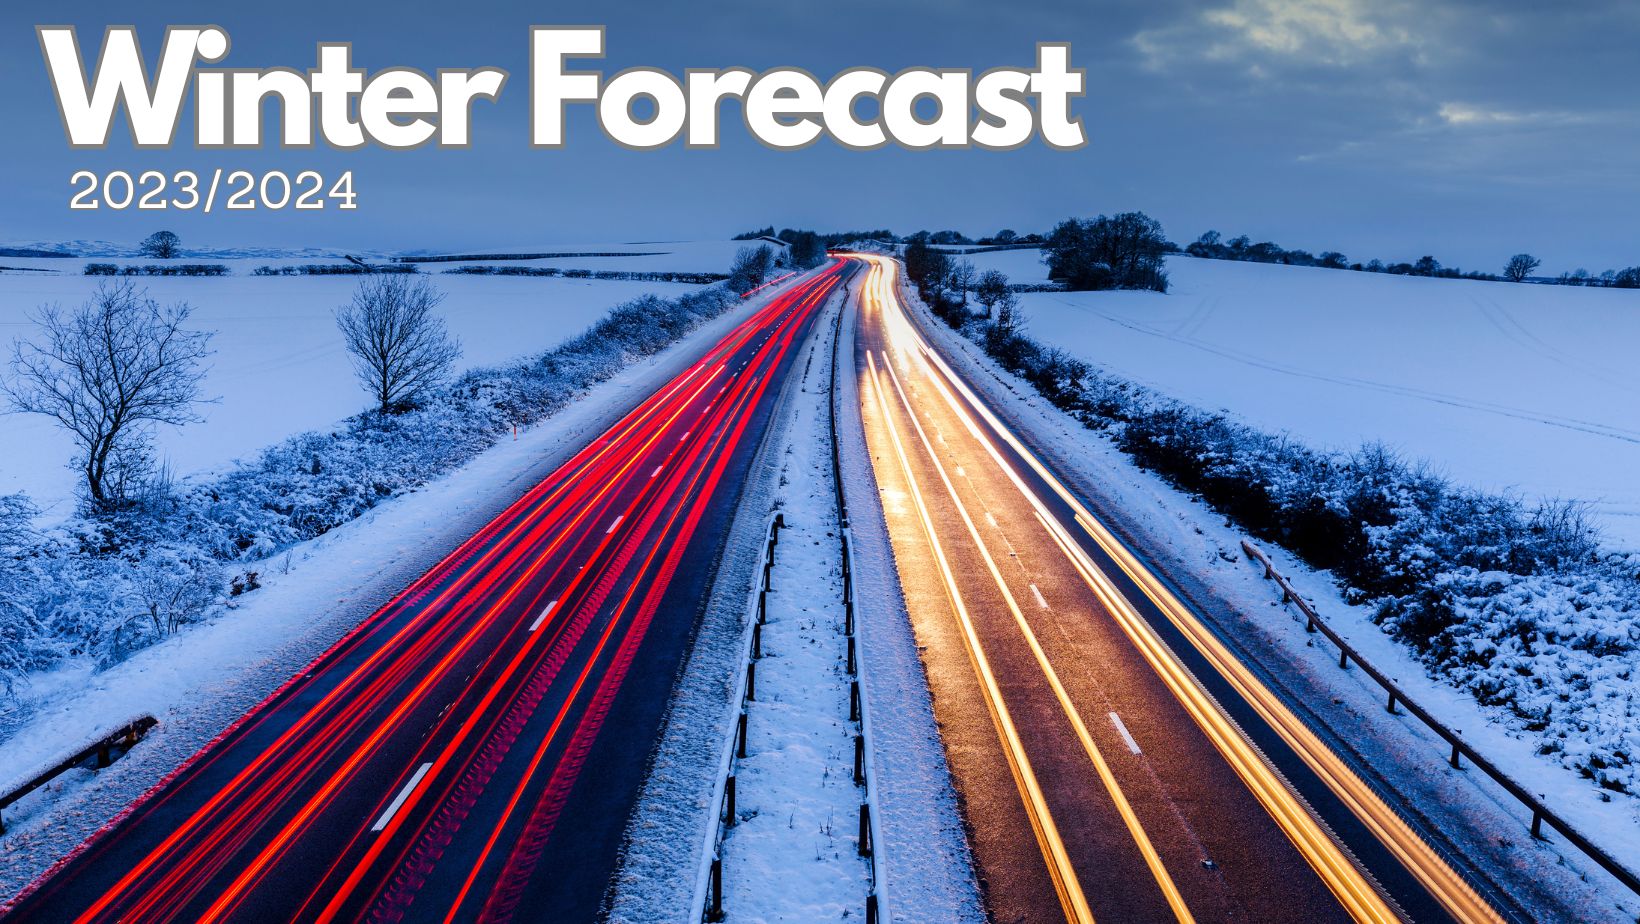 Long Range Weather Forecast Winter 2023/2024 Netweather.tv